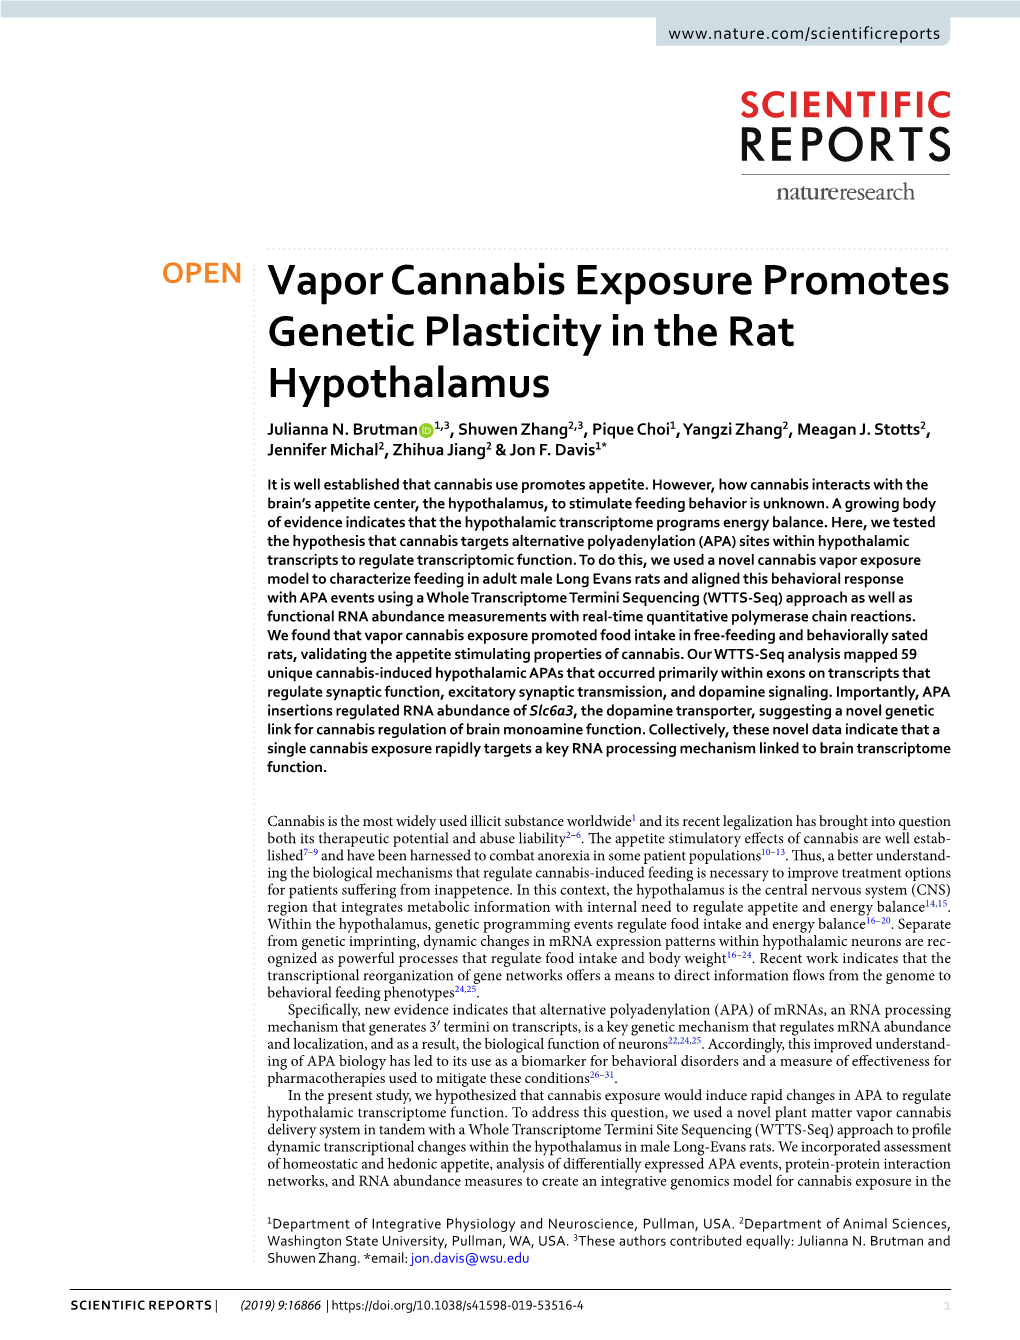 Vapor Cannabis Exposure Promotes Genetic Plasticity in the Rat Hypothalamus Julianna N